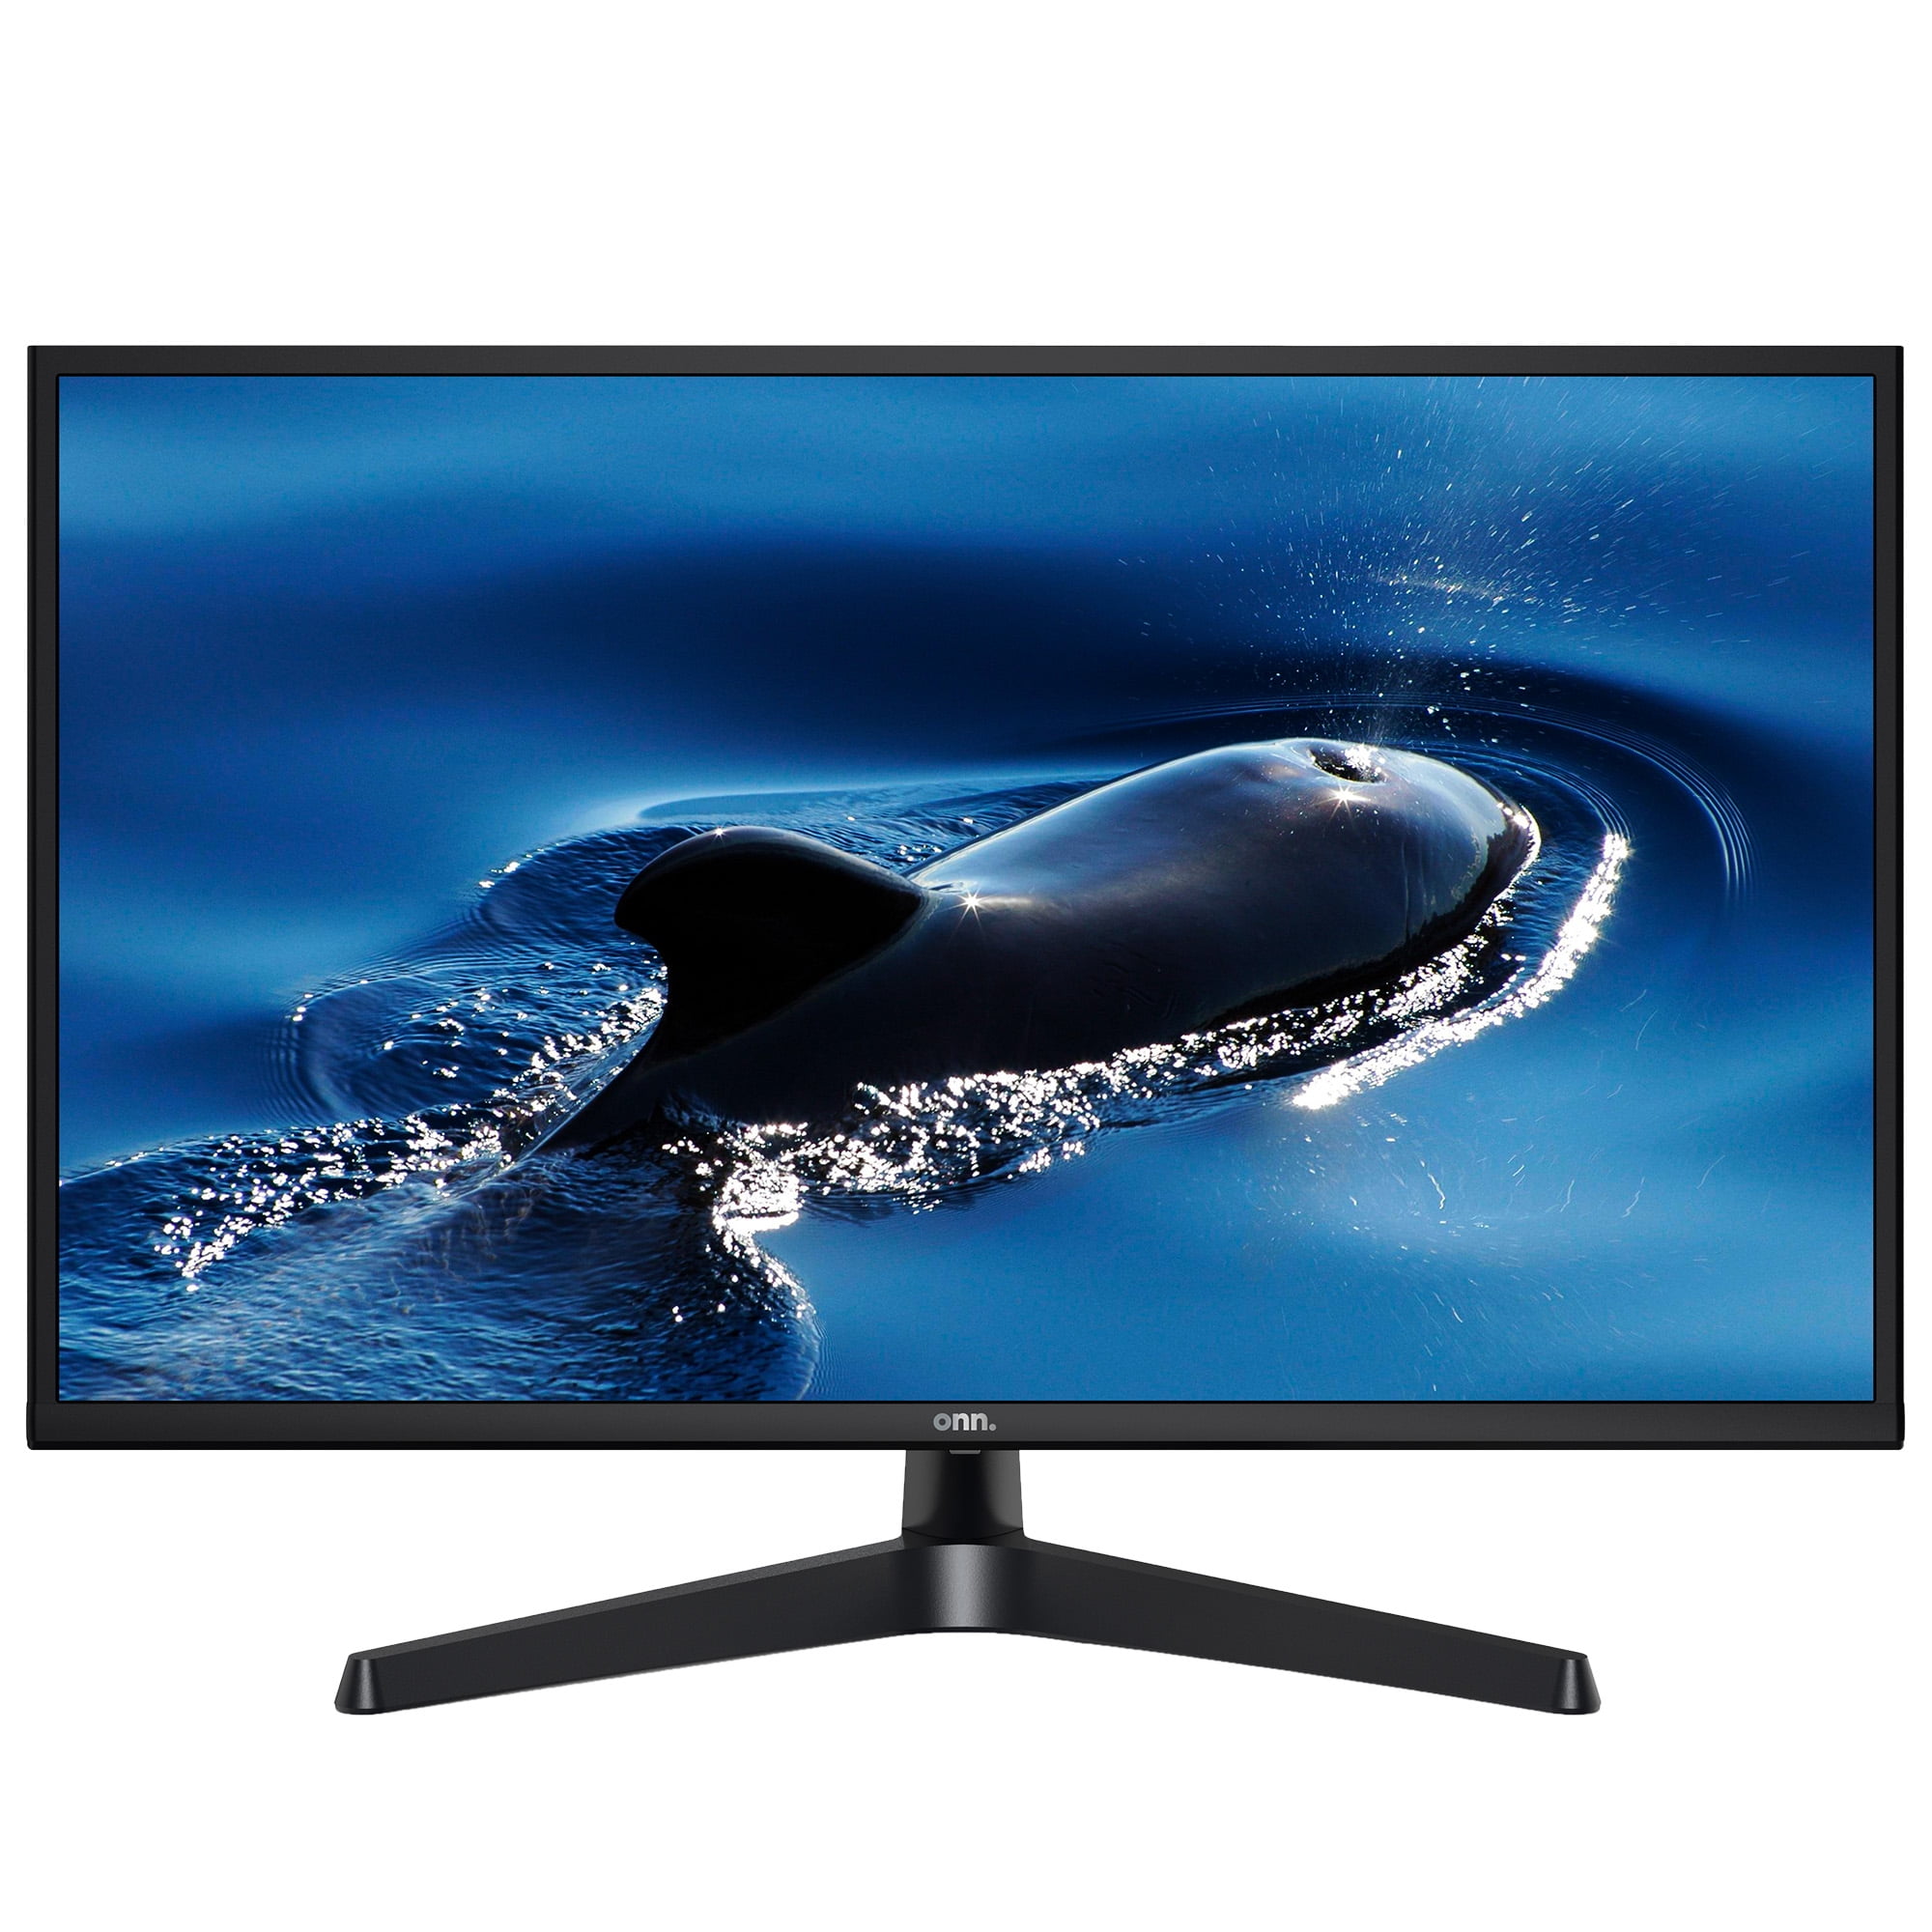 Ecrans Samsung LED - 24 - 1920 x 1080 Full HD (1080p) @ 75 Hz - 1 ms -  HDMI, VGA - high glossy black+Cable HDMI -Ref-SD332